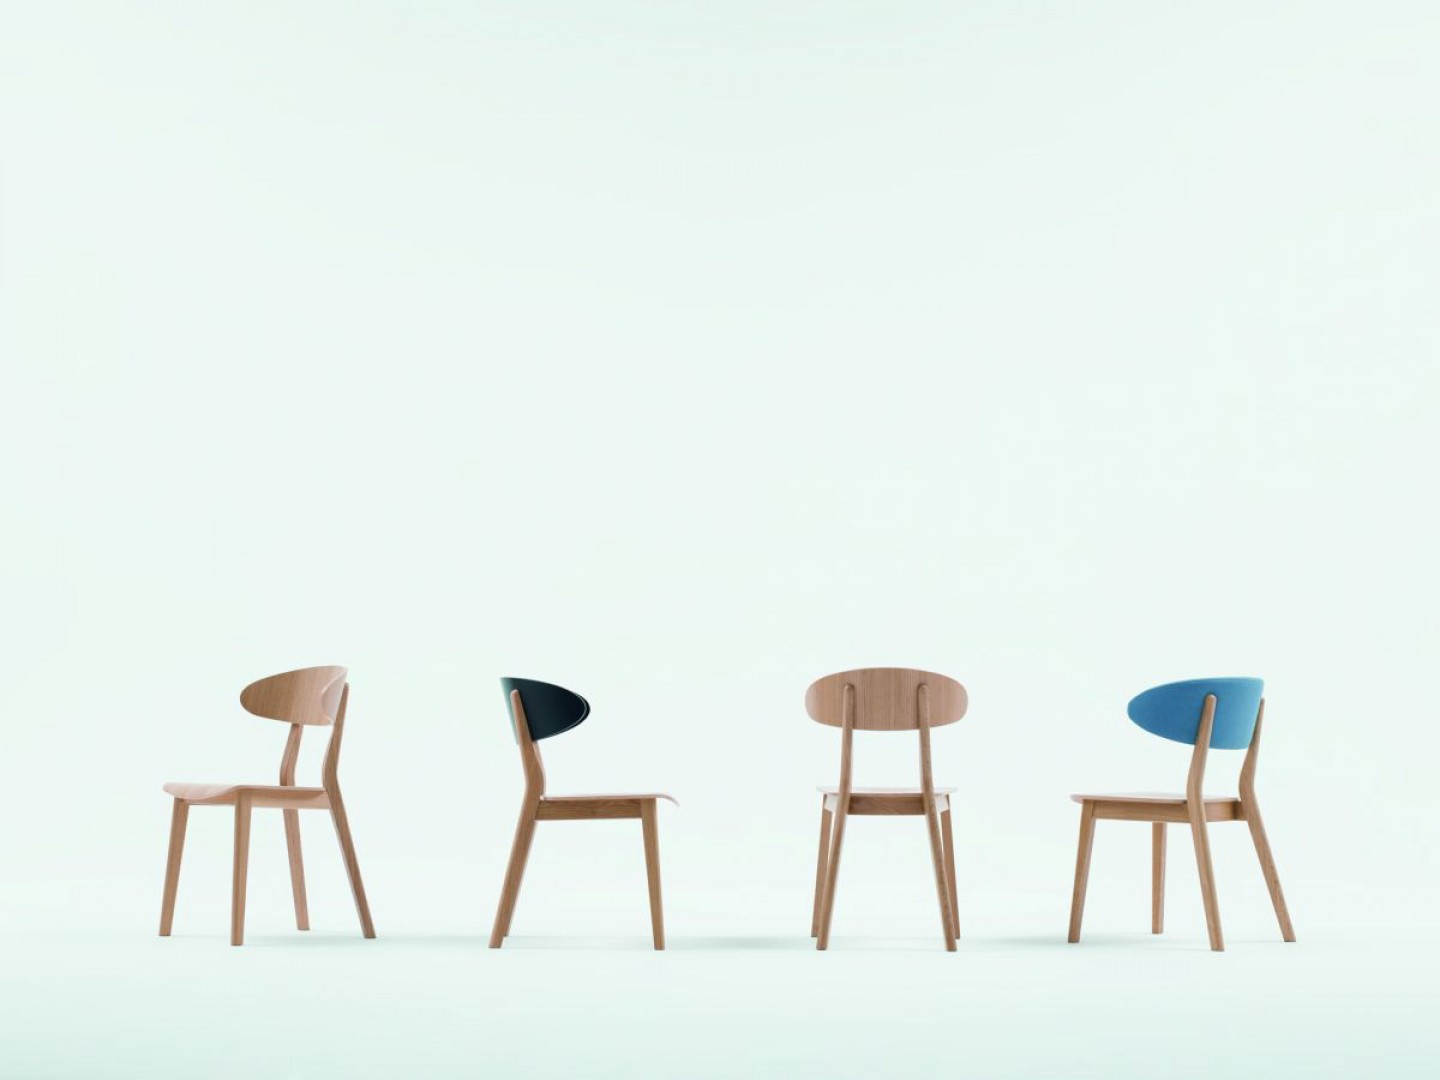 Krzesła z kolekcji  "Lof" (Paged). Projekt: Tomek Rygalik. Fot. Paged